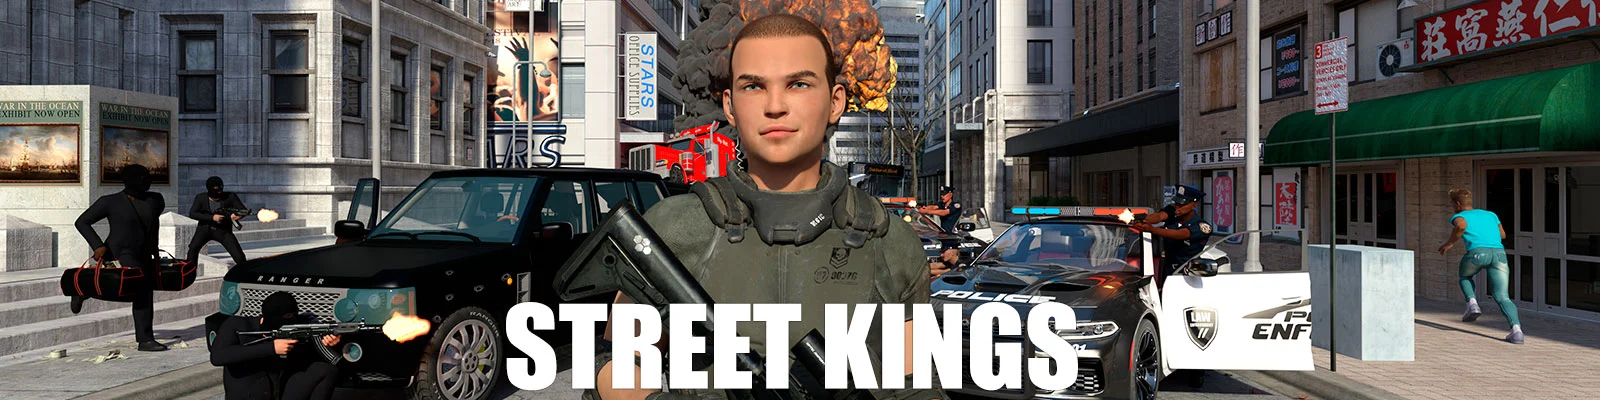 Street Kings: The Big Game main image